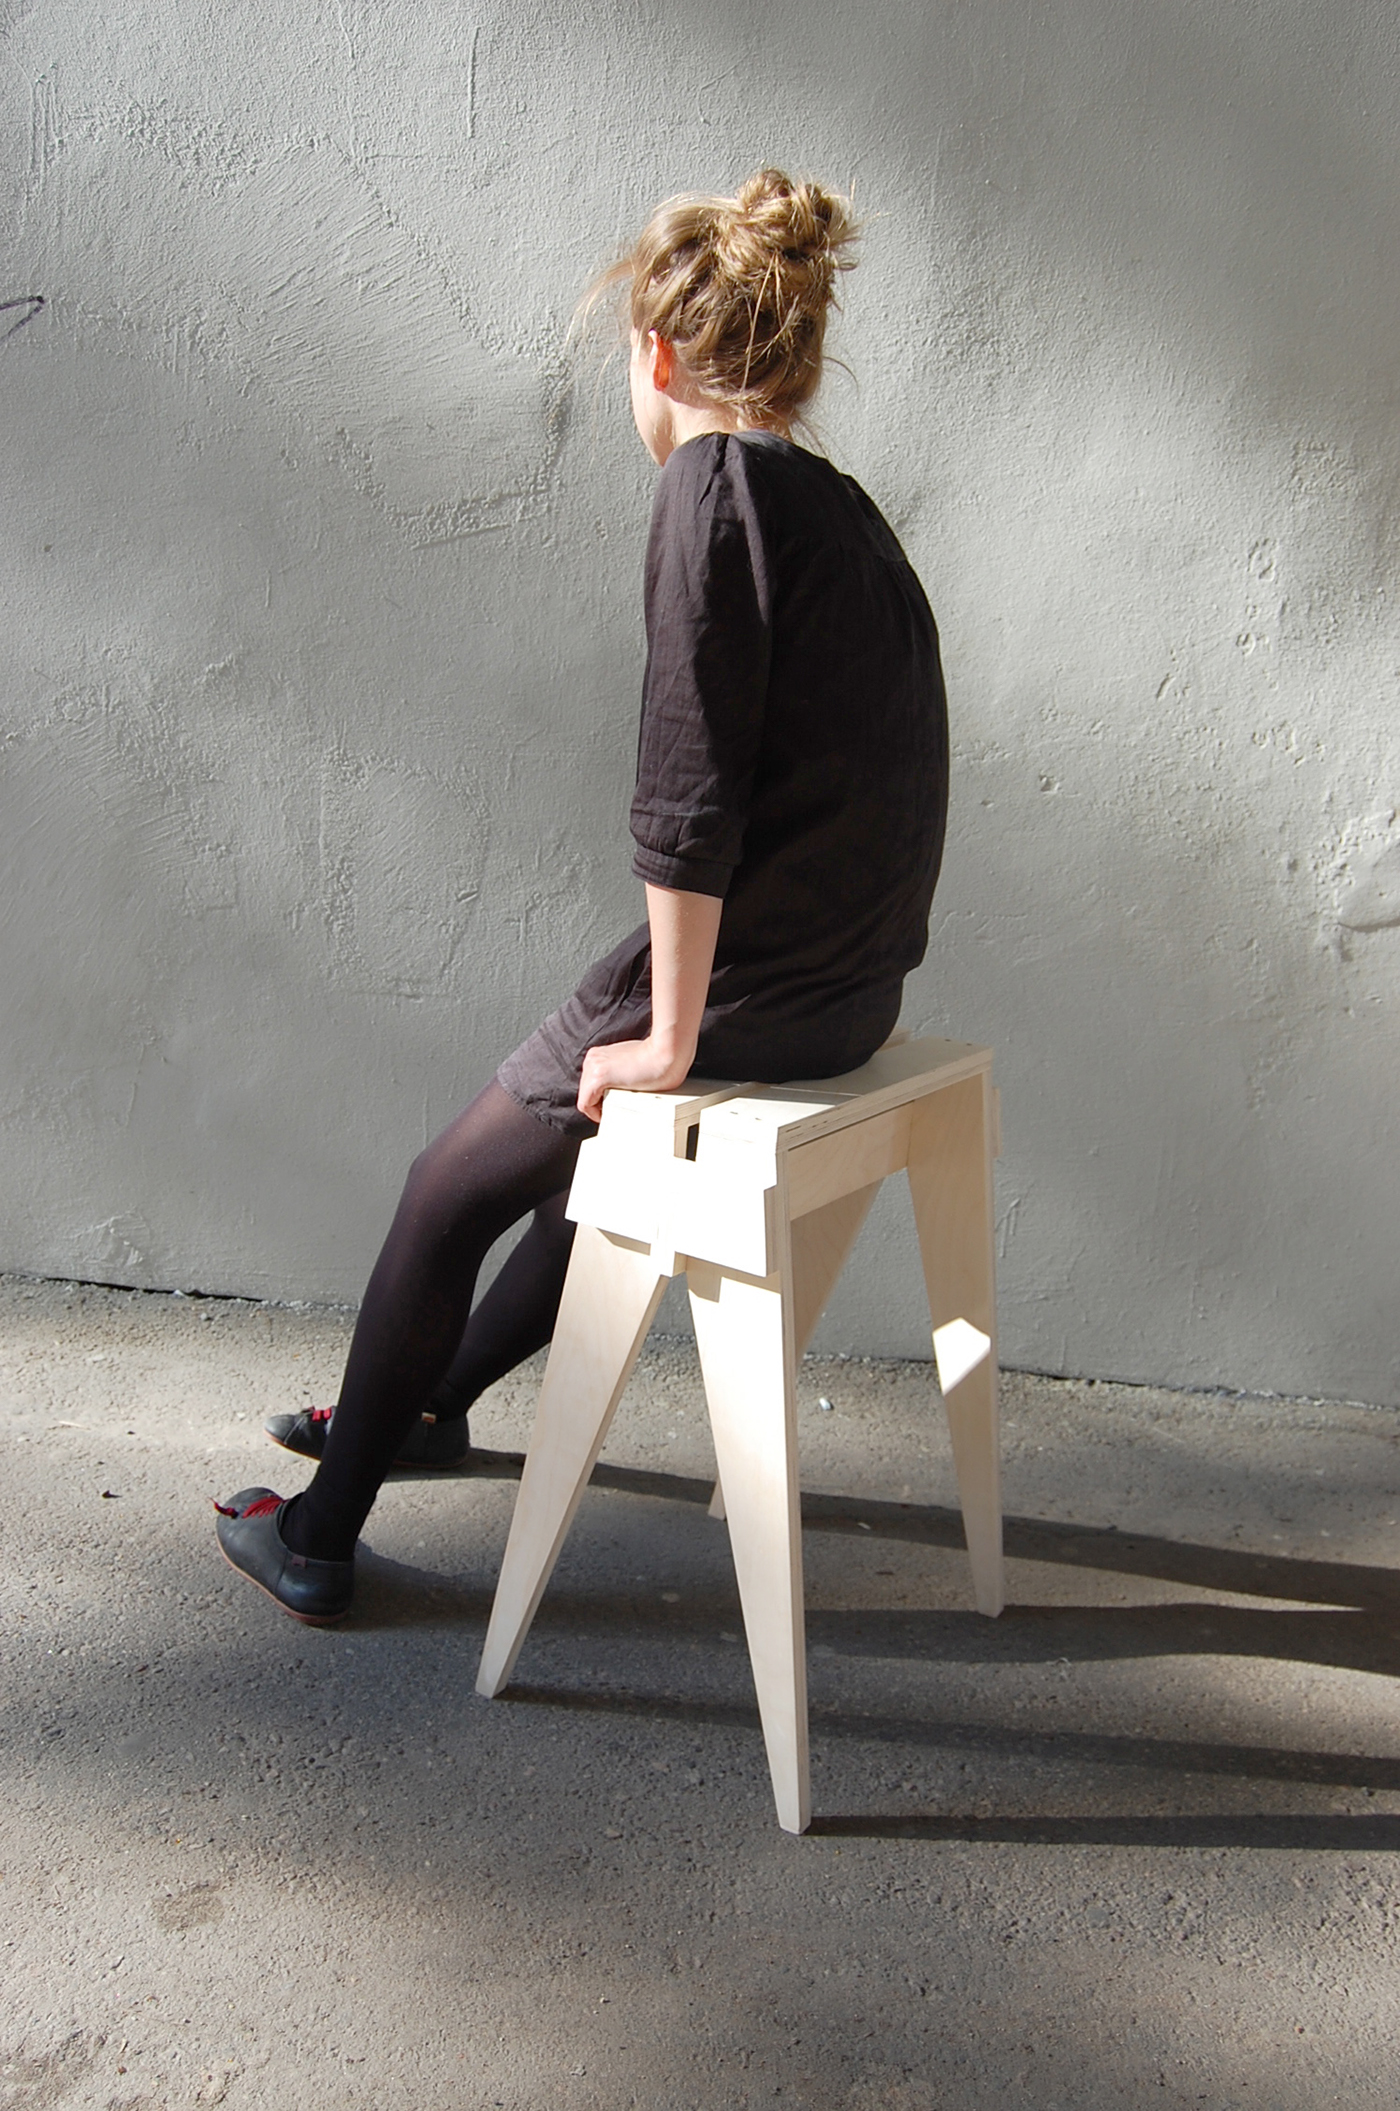 ozka chair stool furniture goat wood materials bench indoor Interior construction design idea PEW seat